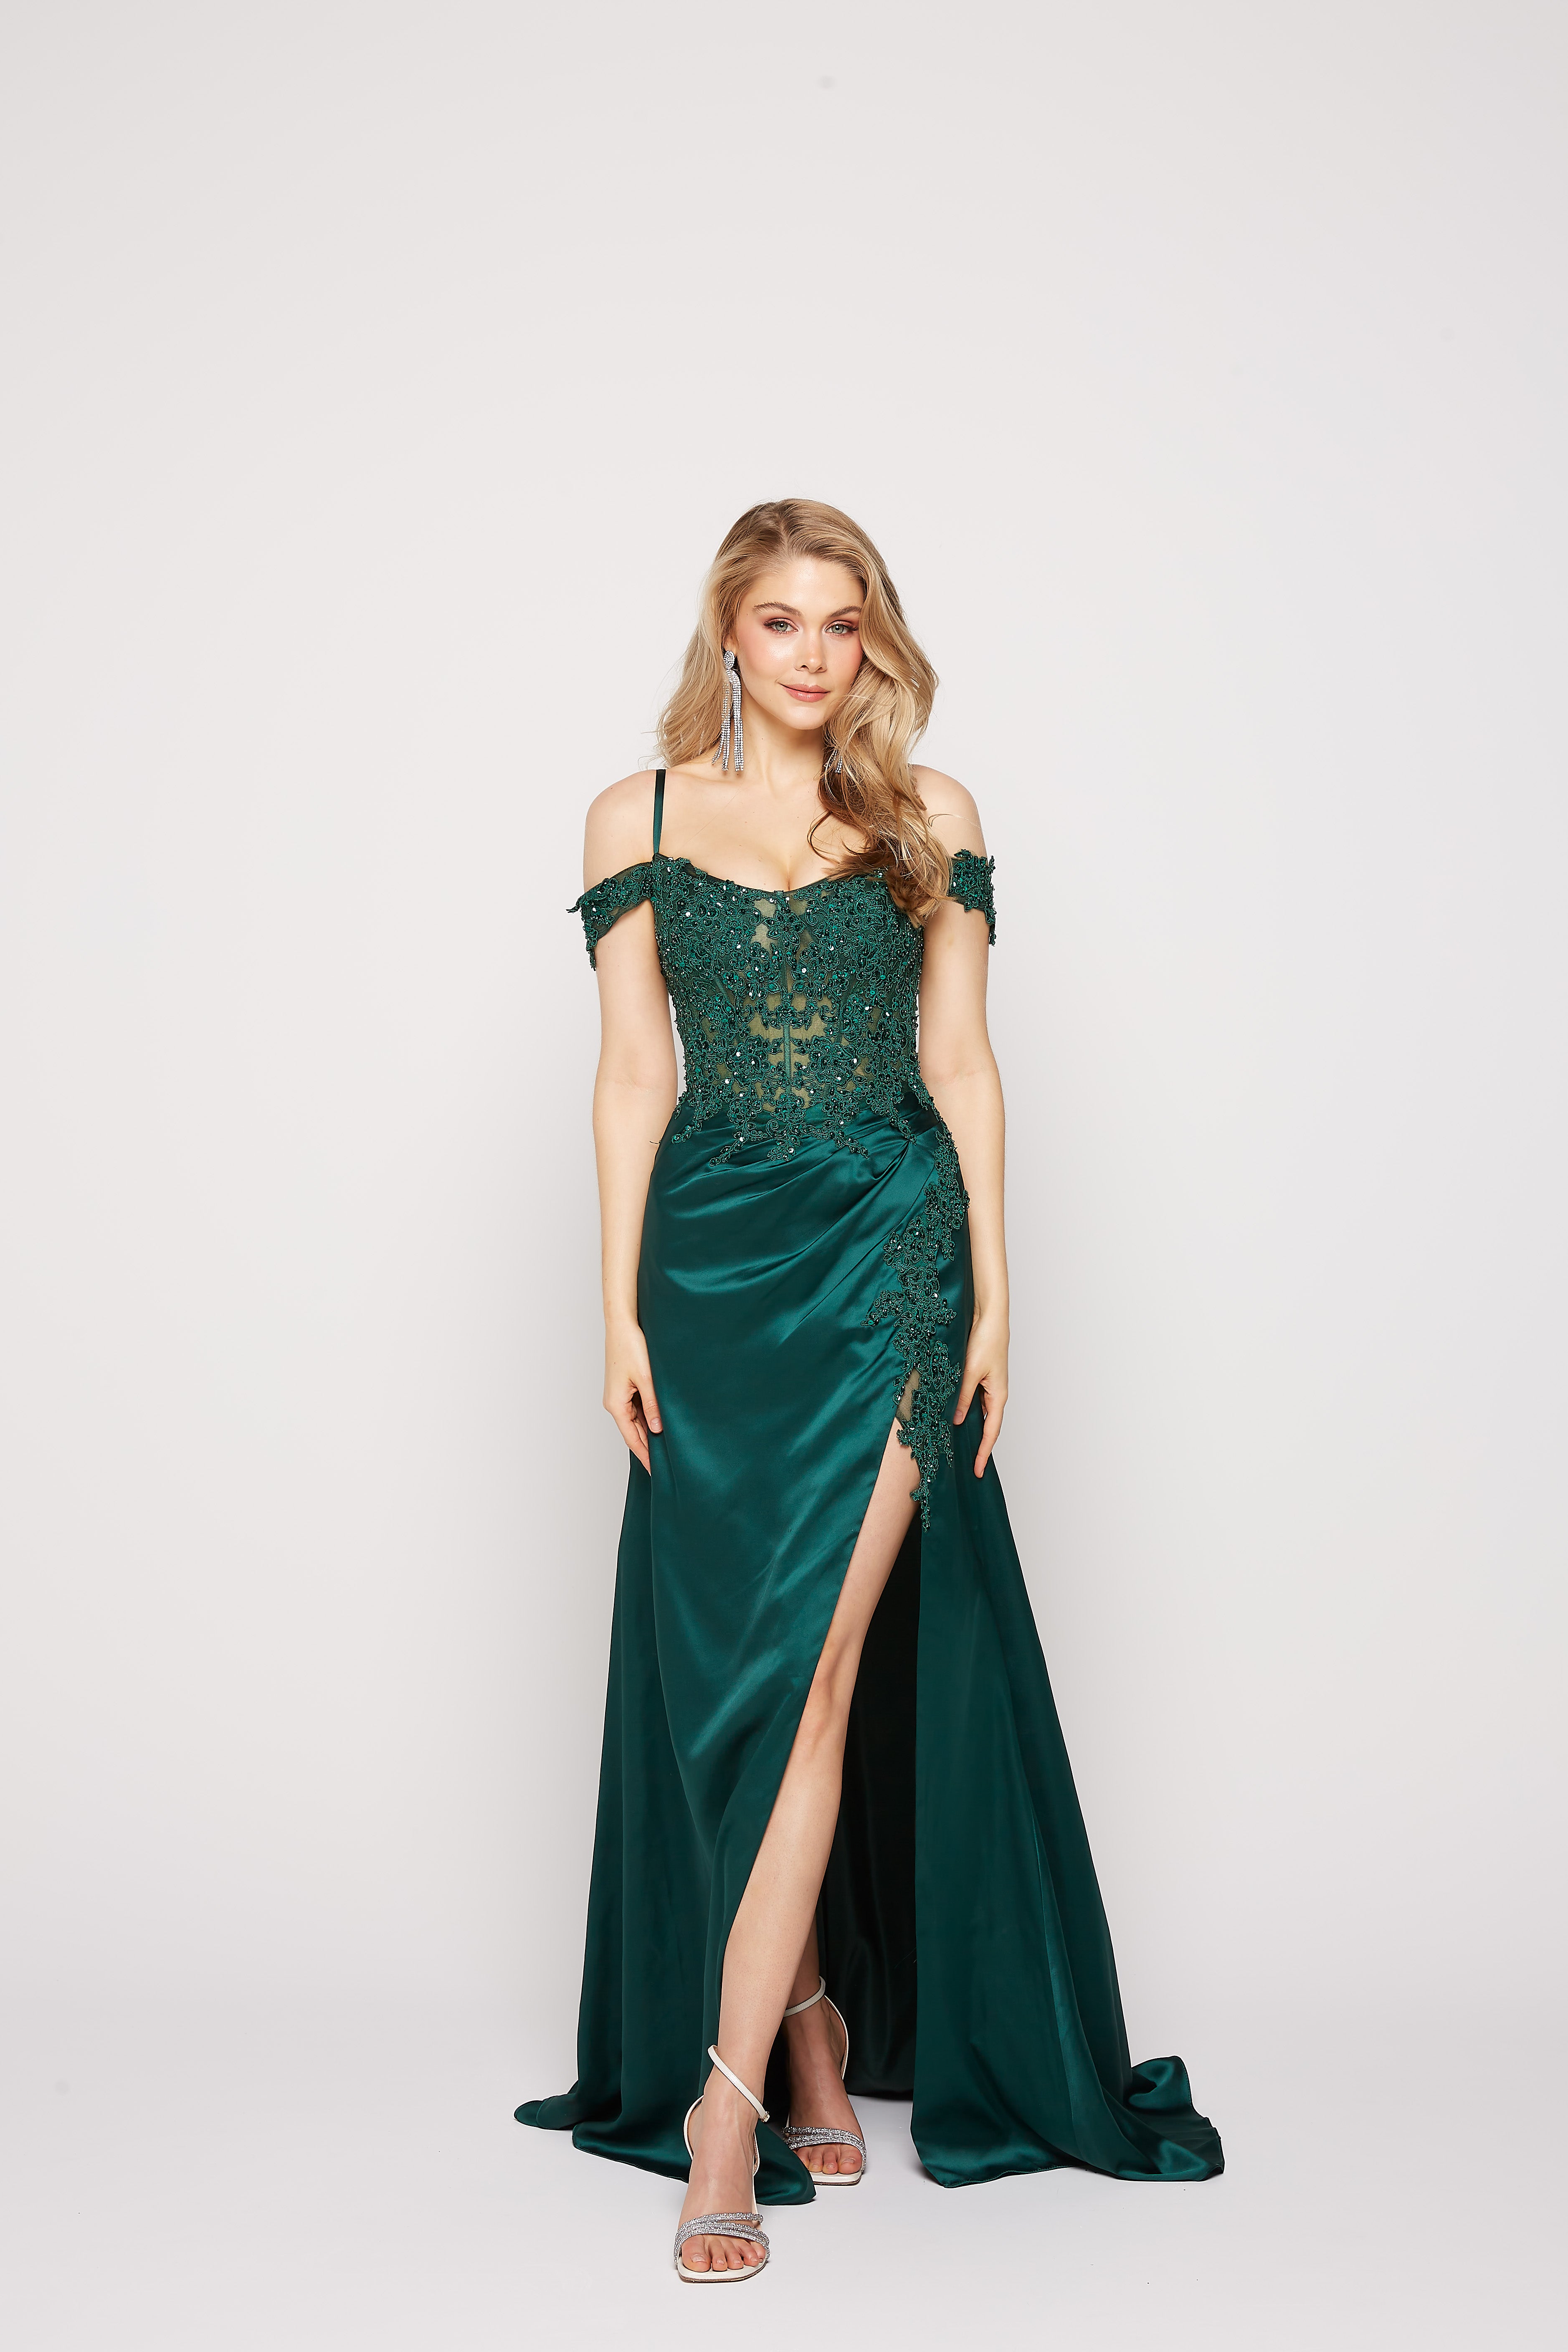 Elyssa PO2320 by Tania Olsen Black, Emerald & Red Formal Dress